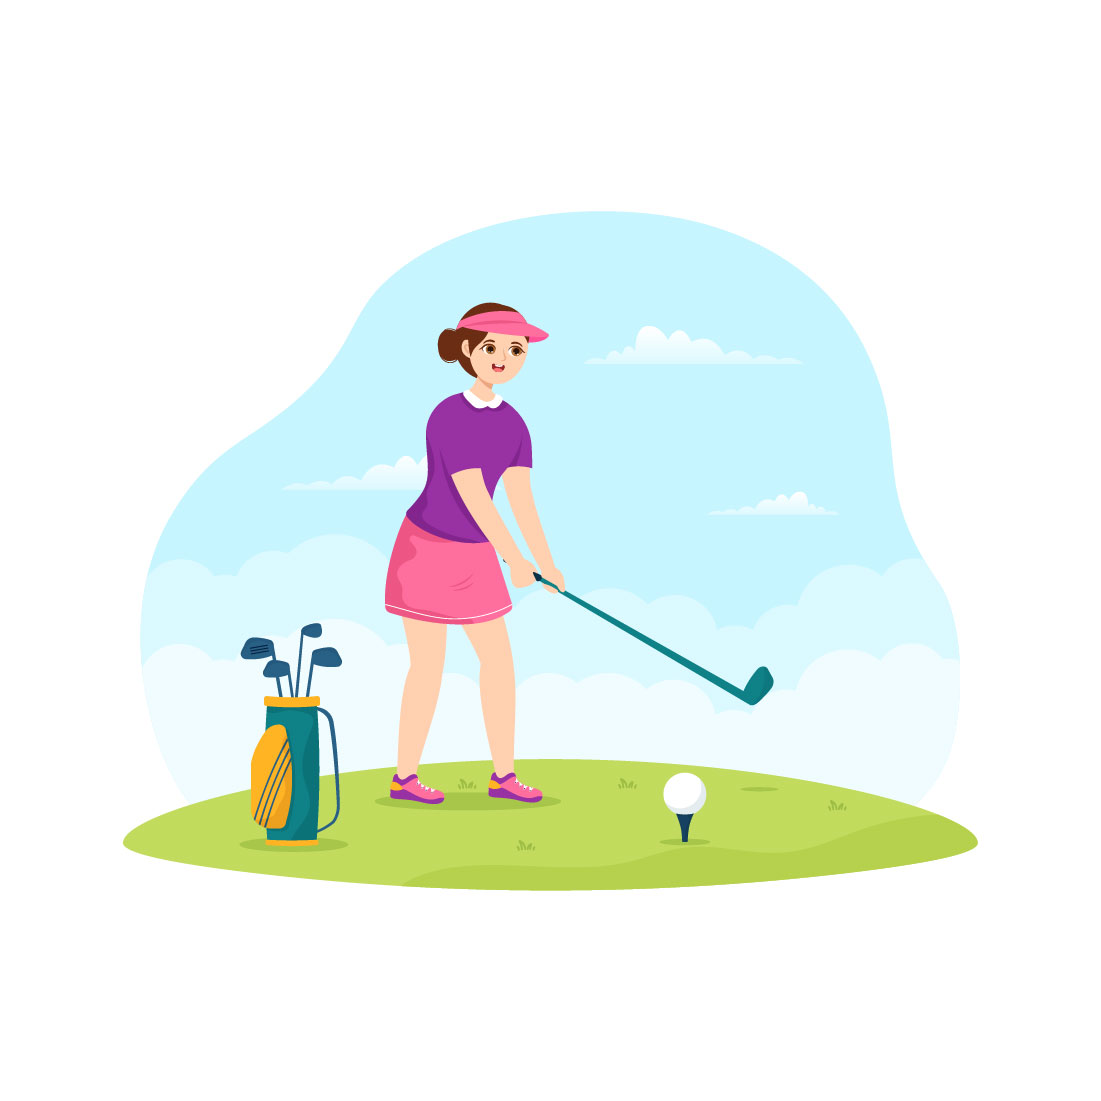 Golf Sport Graphics Design cover image.